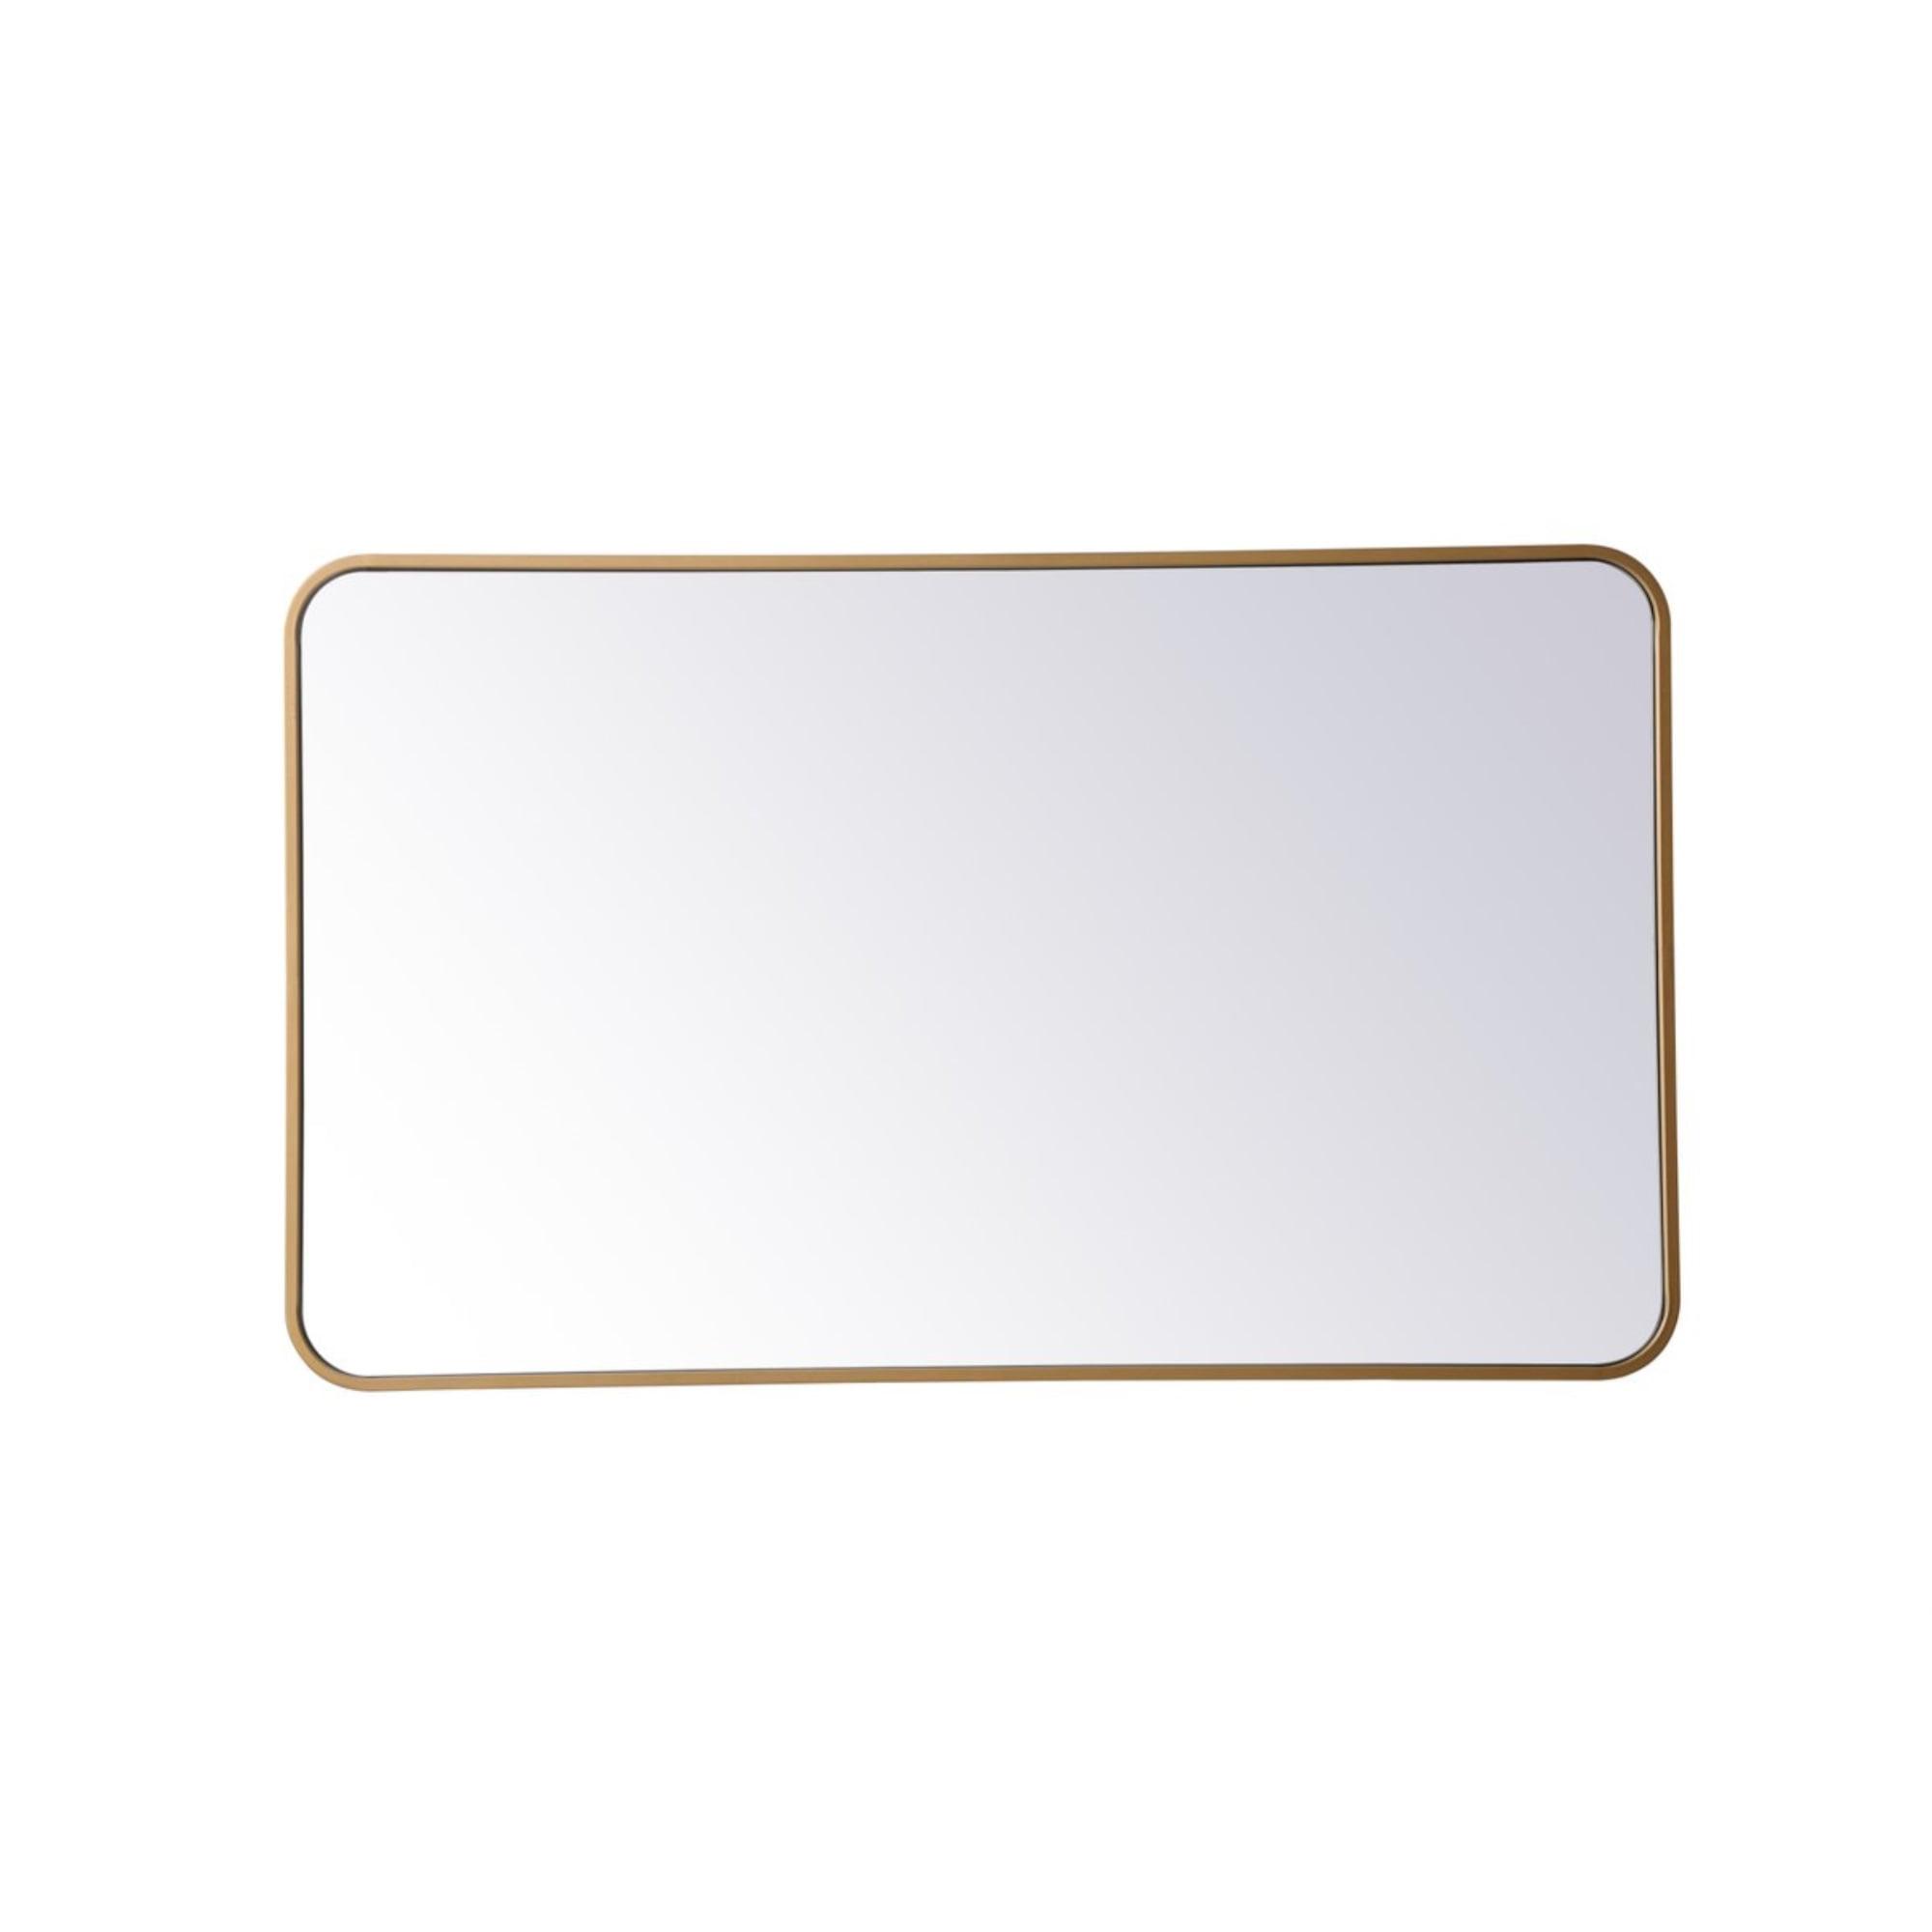 Contemporary Gold Wood Rectangular Bathroom Mirror 24x40 inch